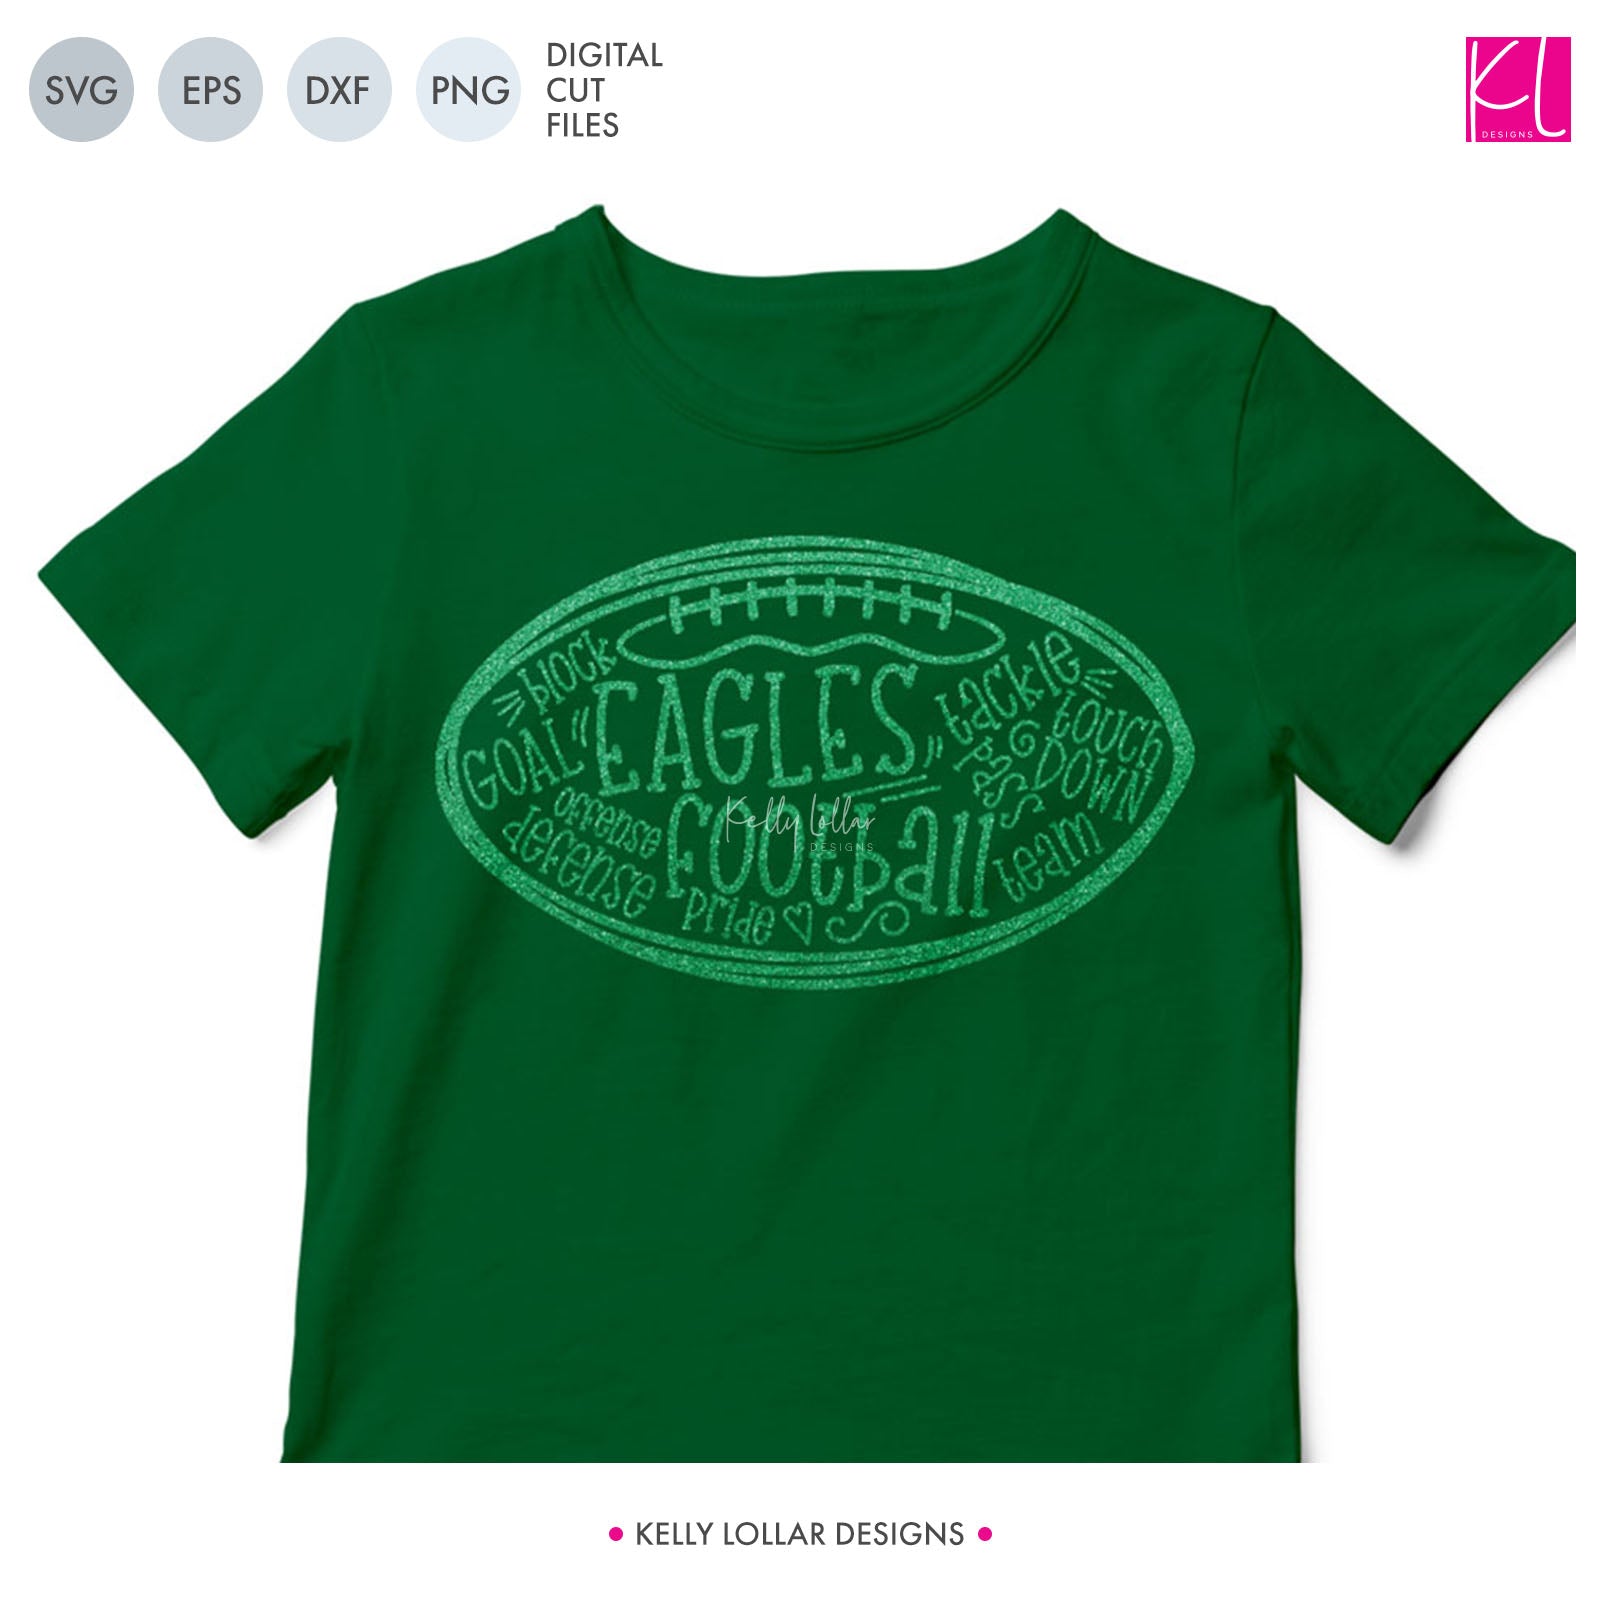 Eagles Football Bundle  SVG DXF EPS PNG Cut Files - Kelly Lollar Designs